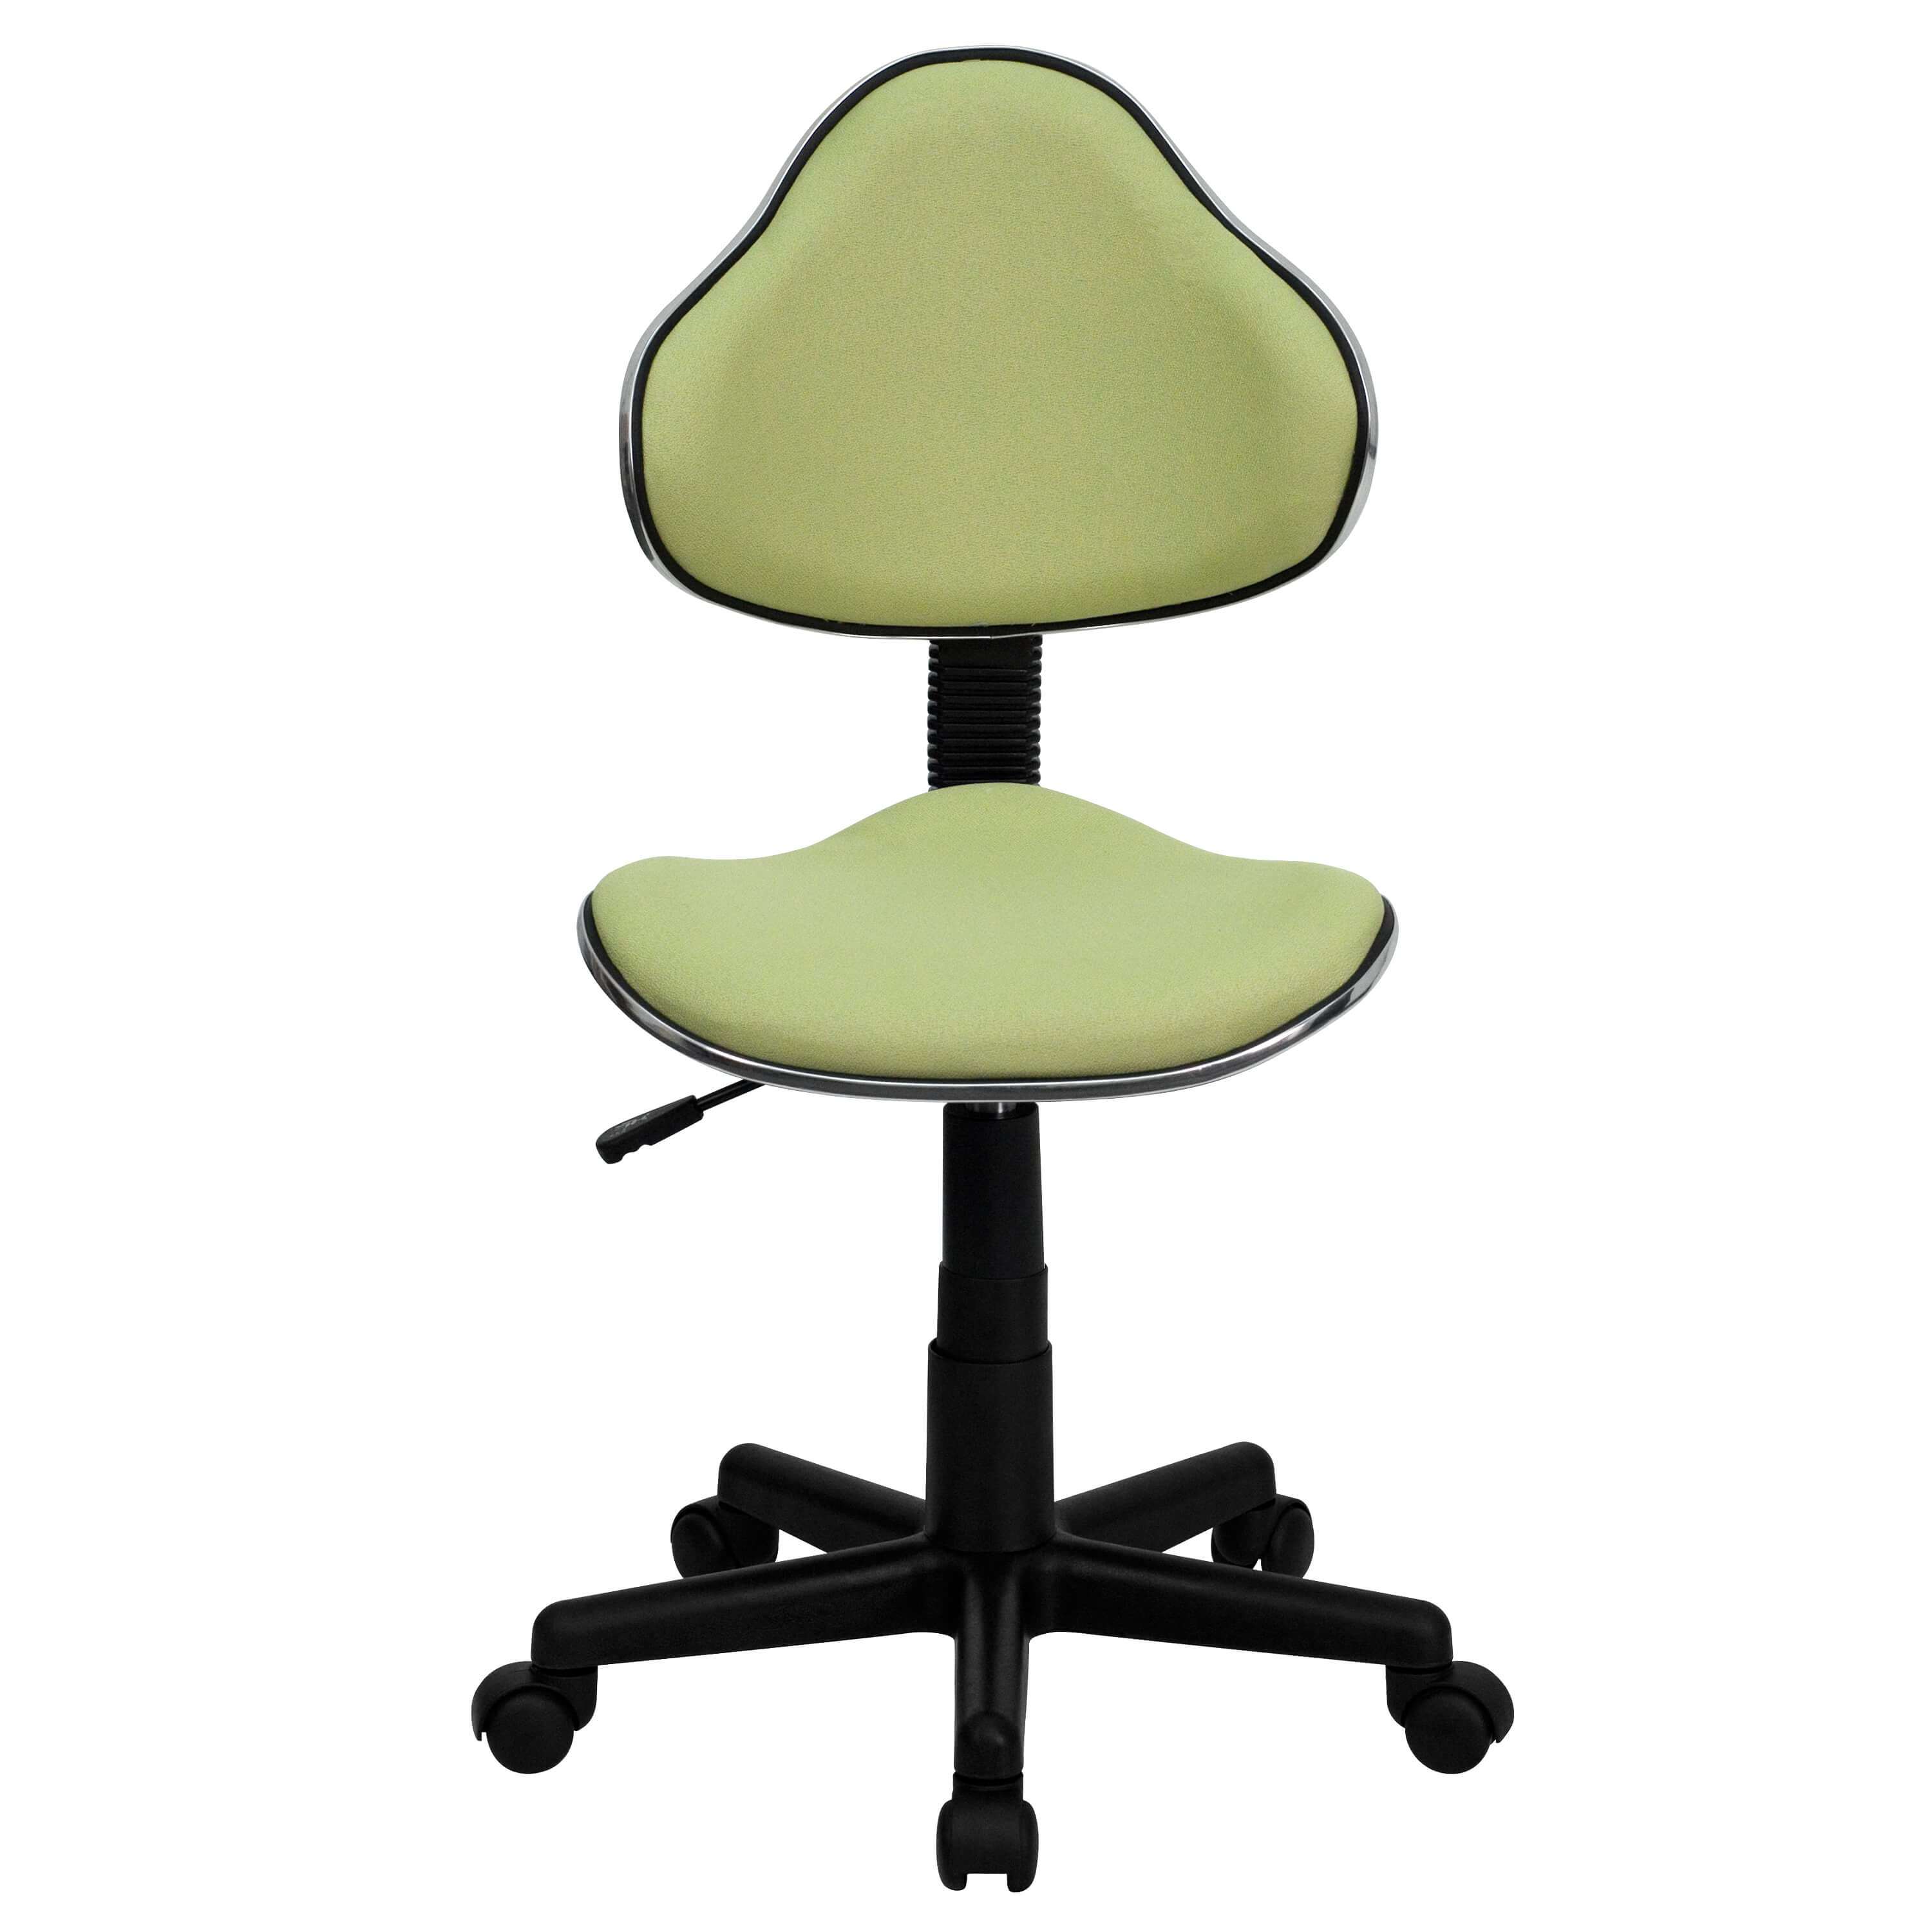 Colorful desk chairs CUB BT 699 AVOCADO GG FLA